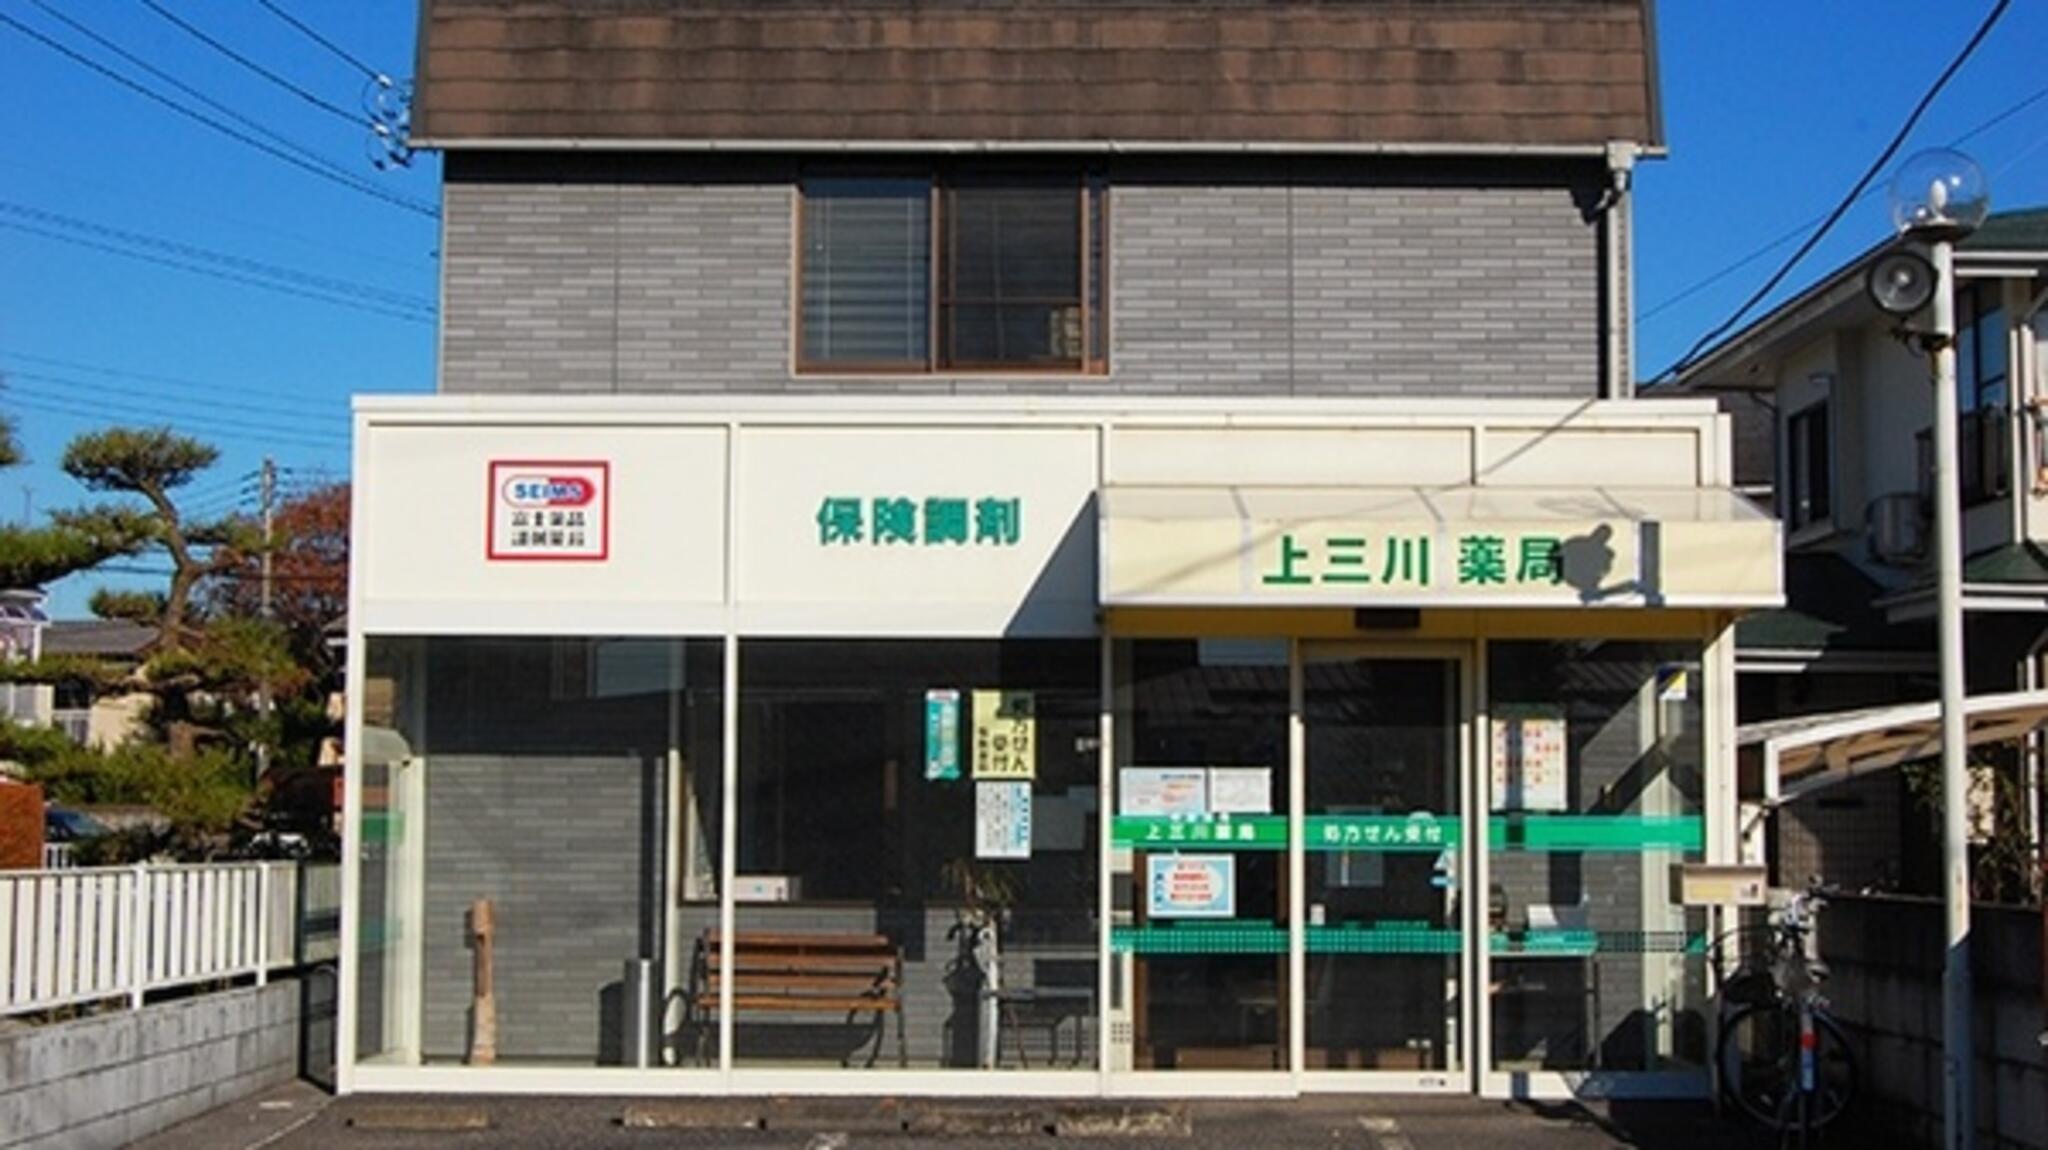 富士薬品 セイムス上三川薬局の代表写真1